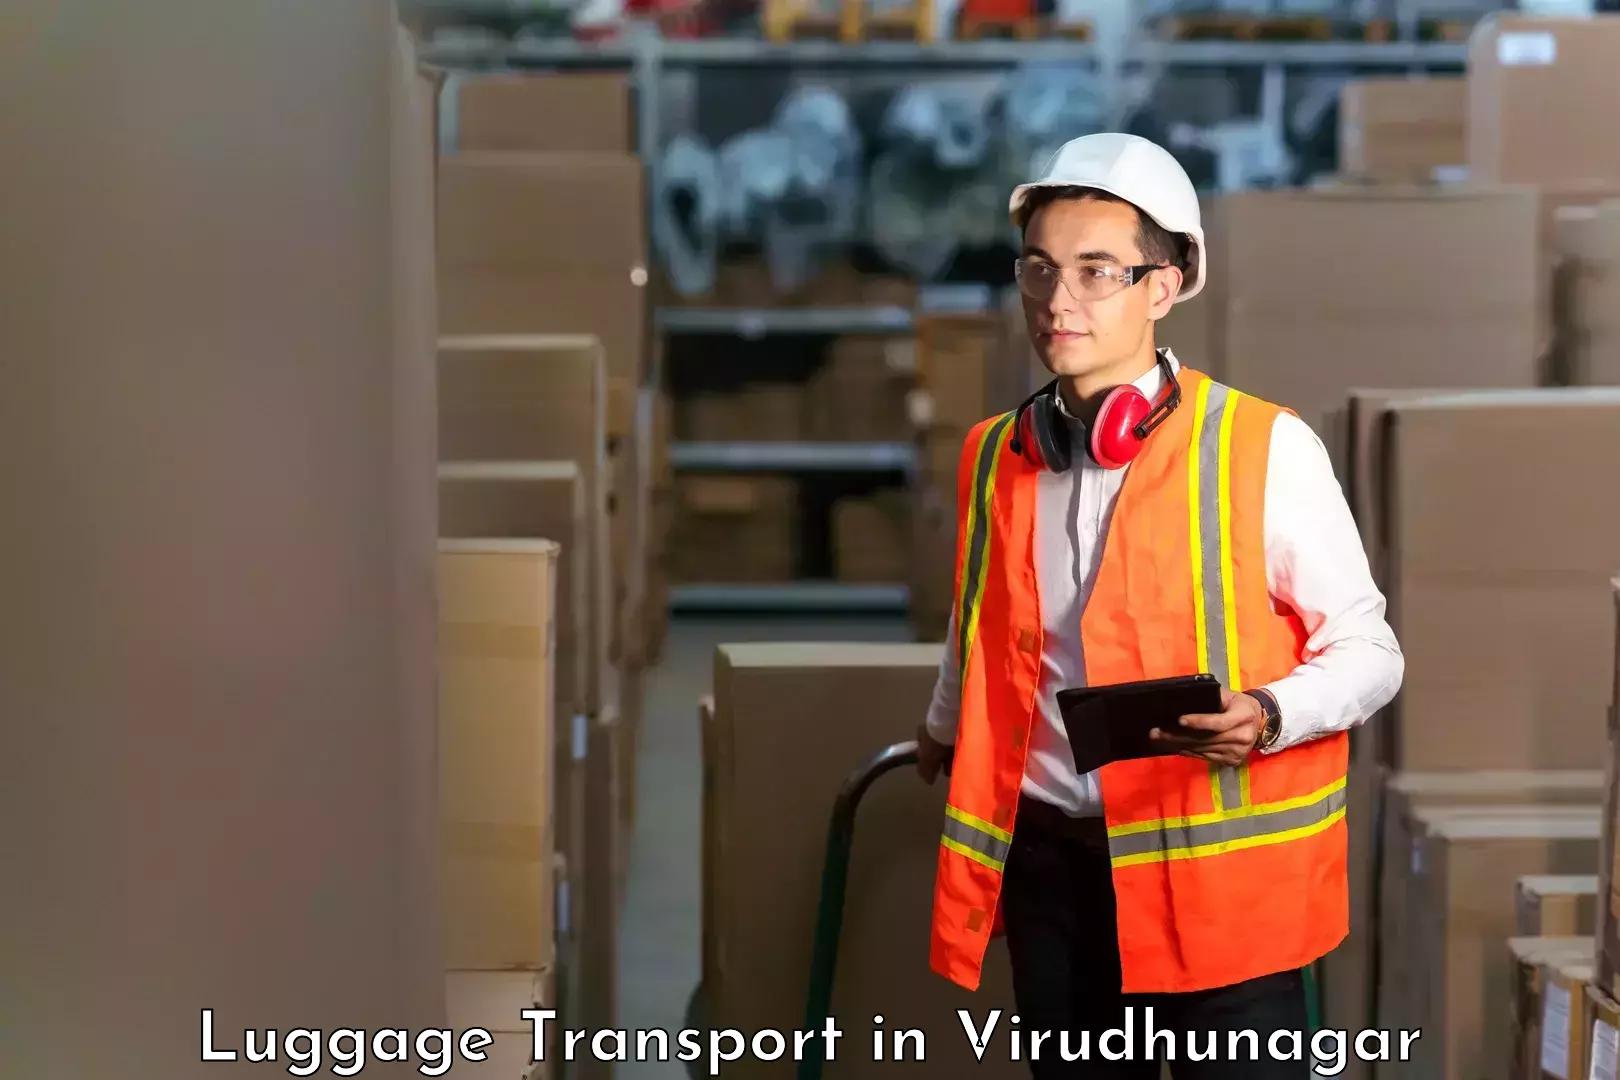 Baggage transport technology in Virudhunagar